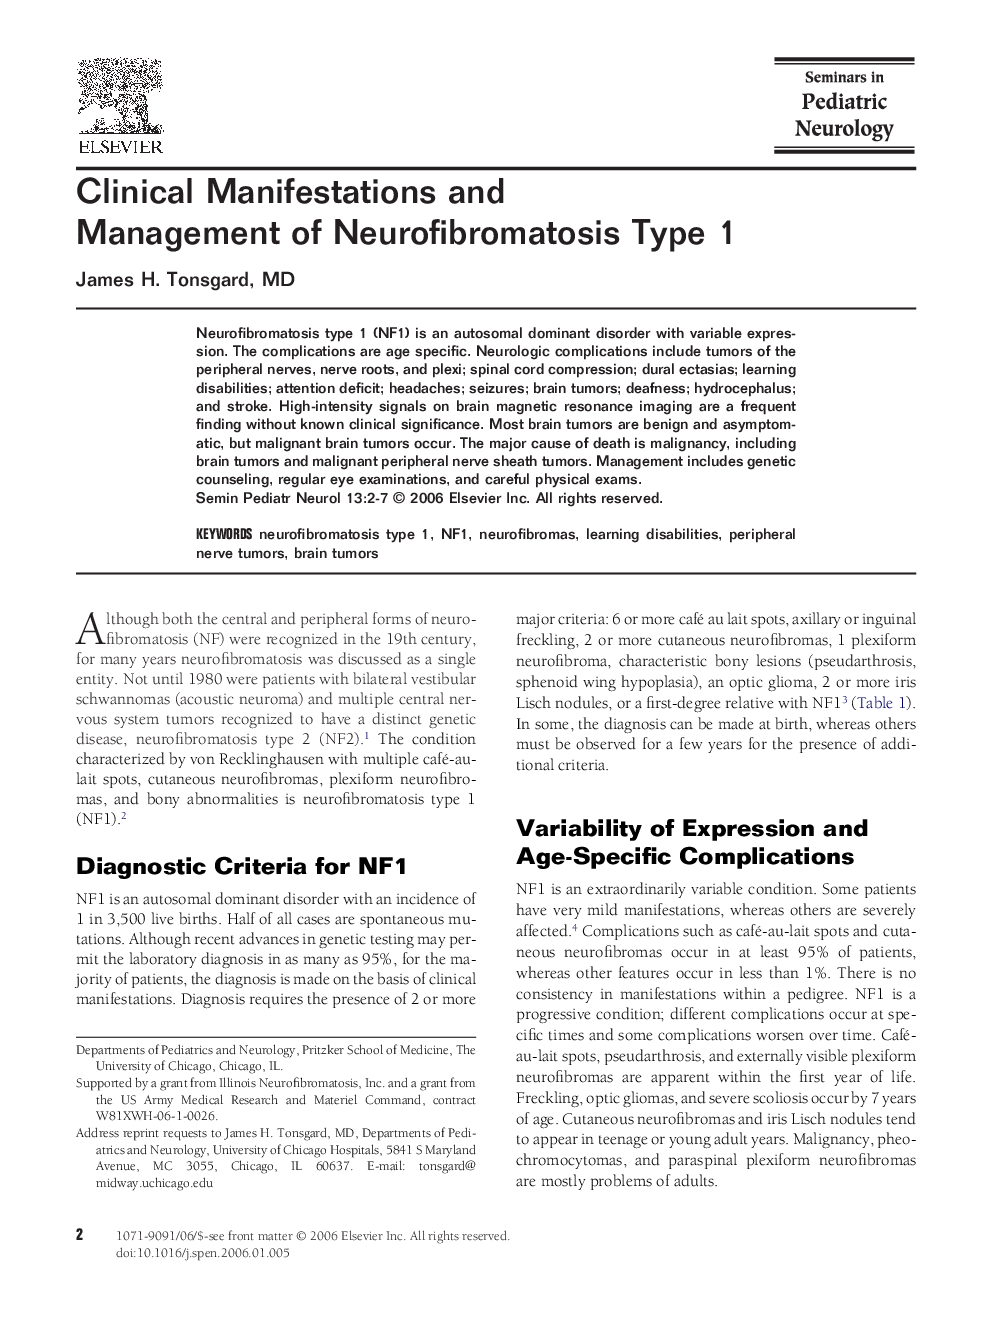 Clinical Manifestations and Management of Neurofibromatosis Type 1 